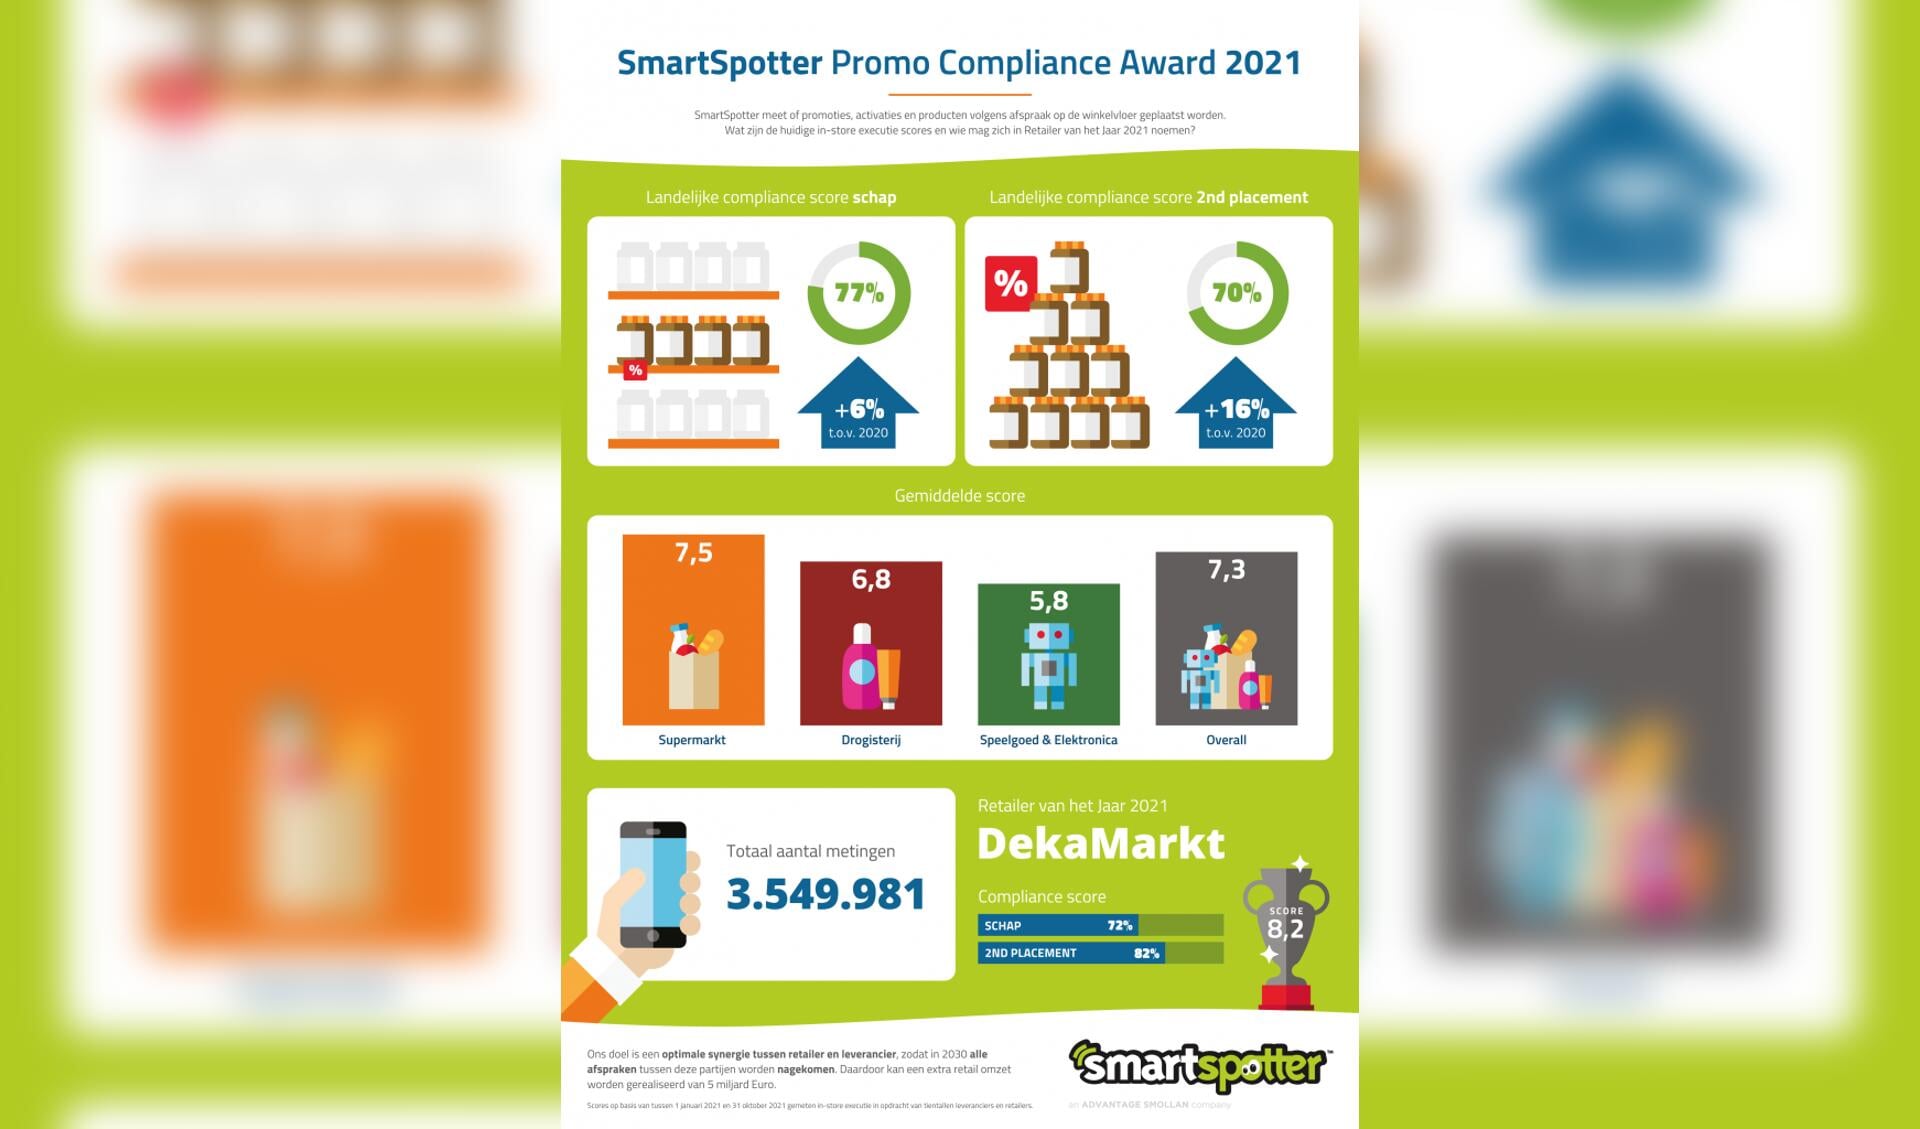 Dekamarkt wint SmartSpotter Promo Compliance Award